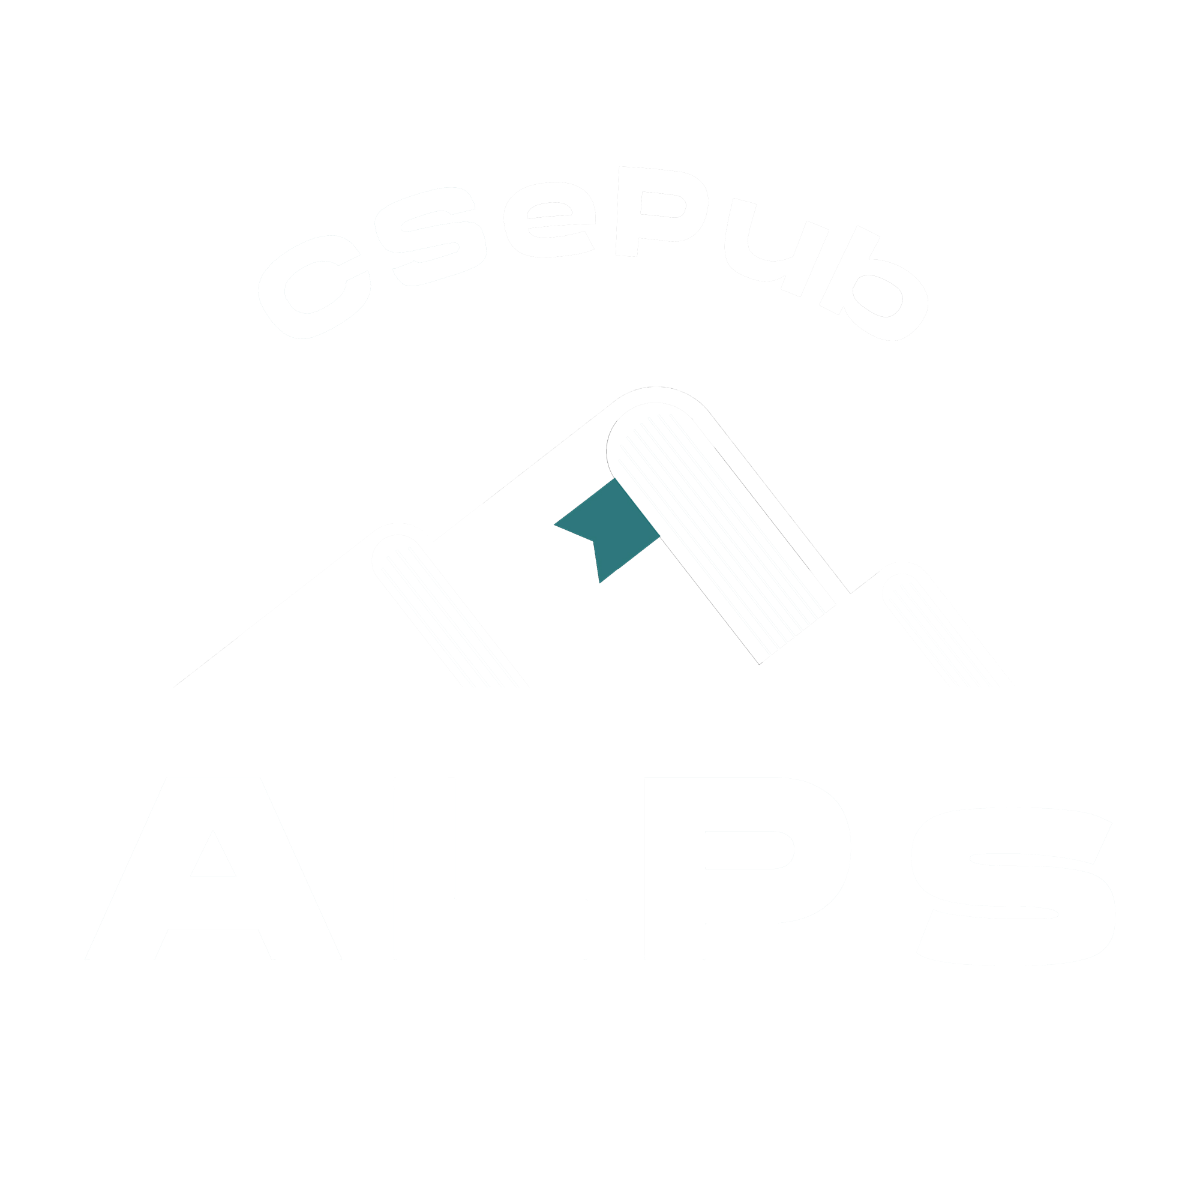 ALPs Adaptive Learning Program functionality from CSePub